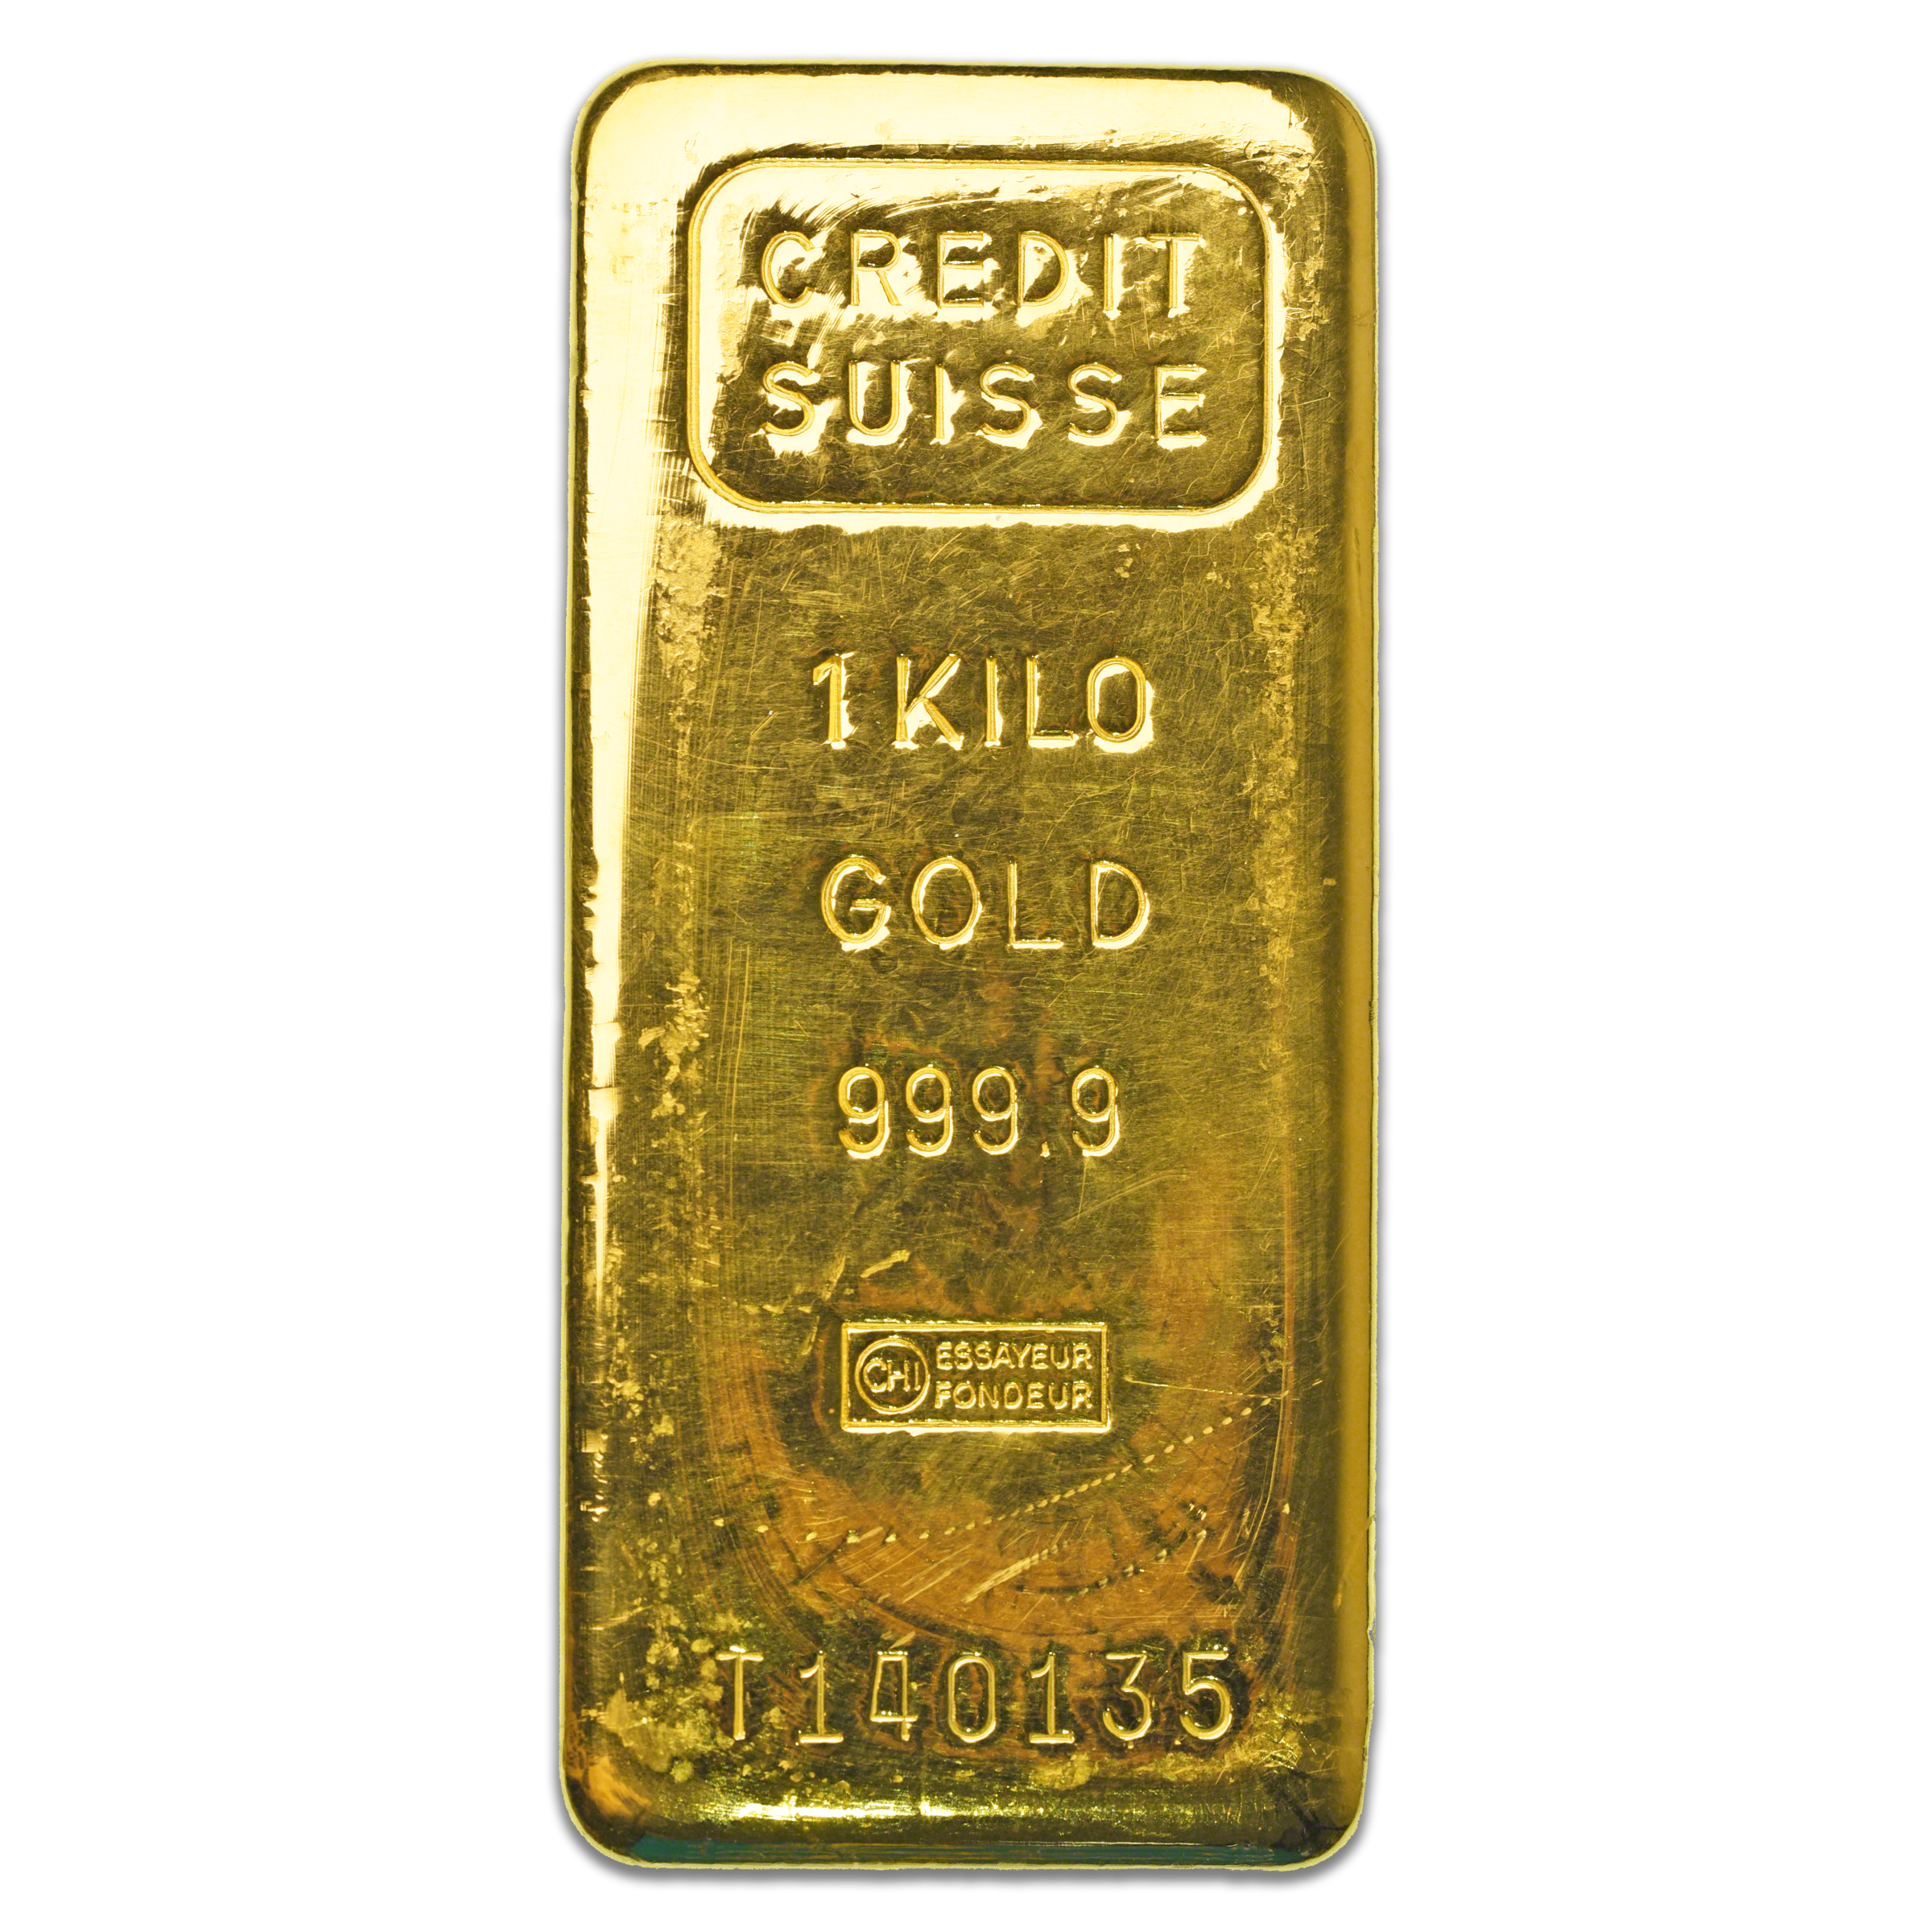 credit suisse gold bar